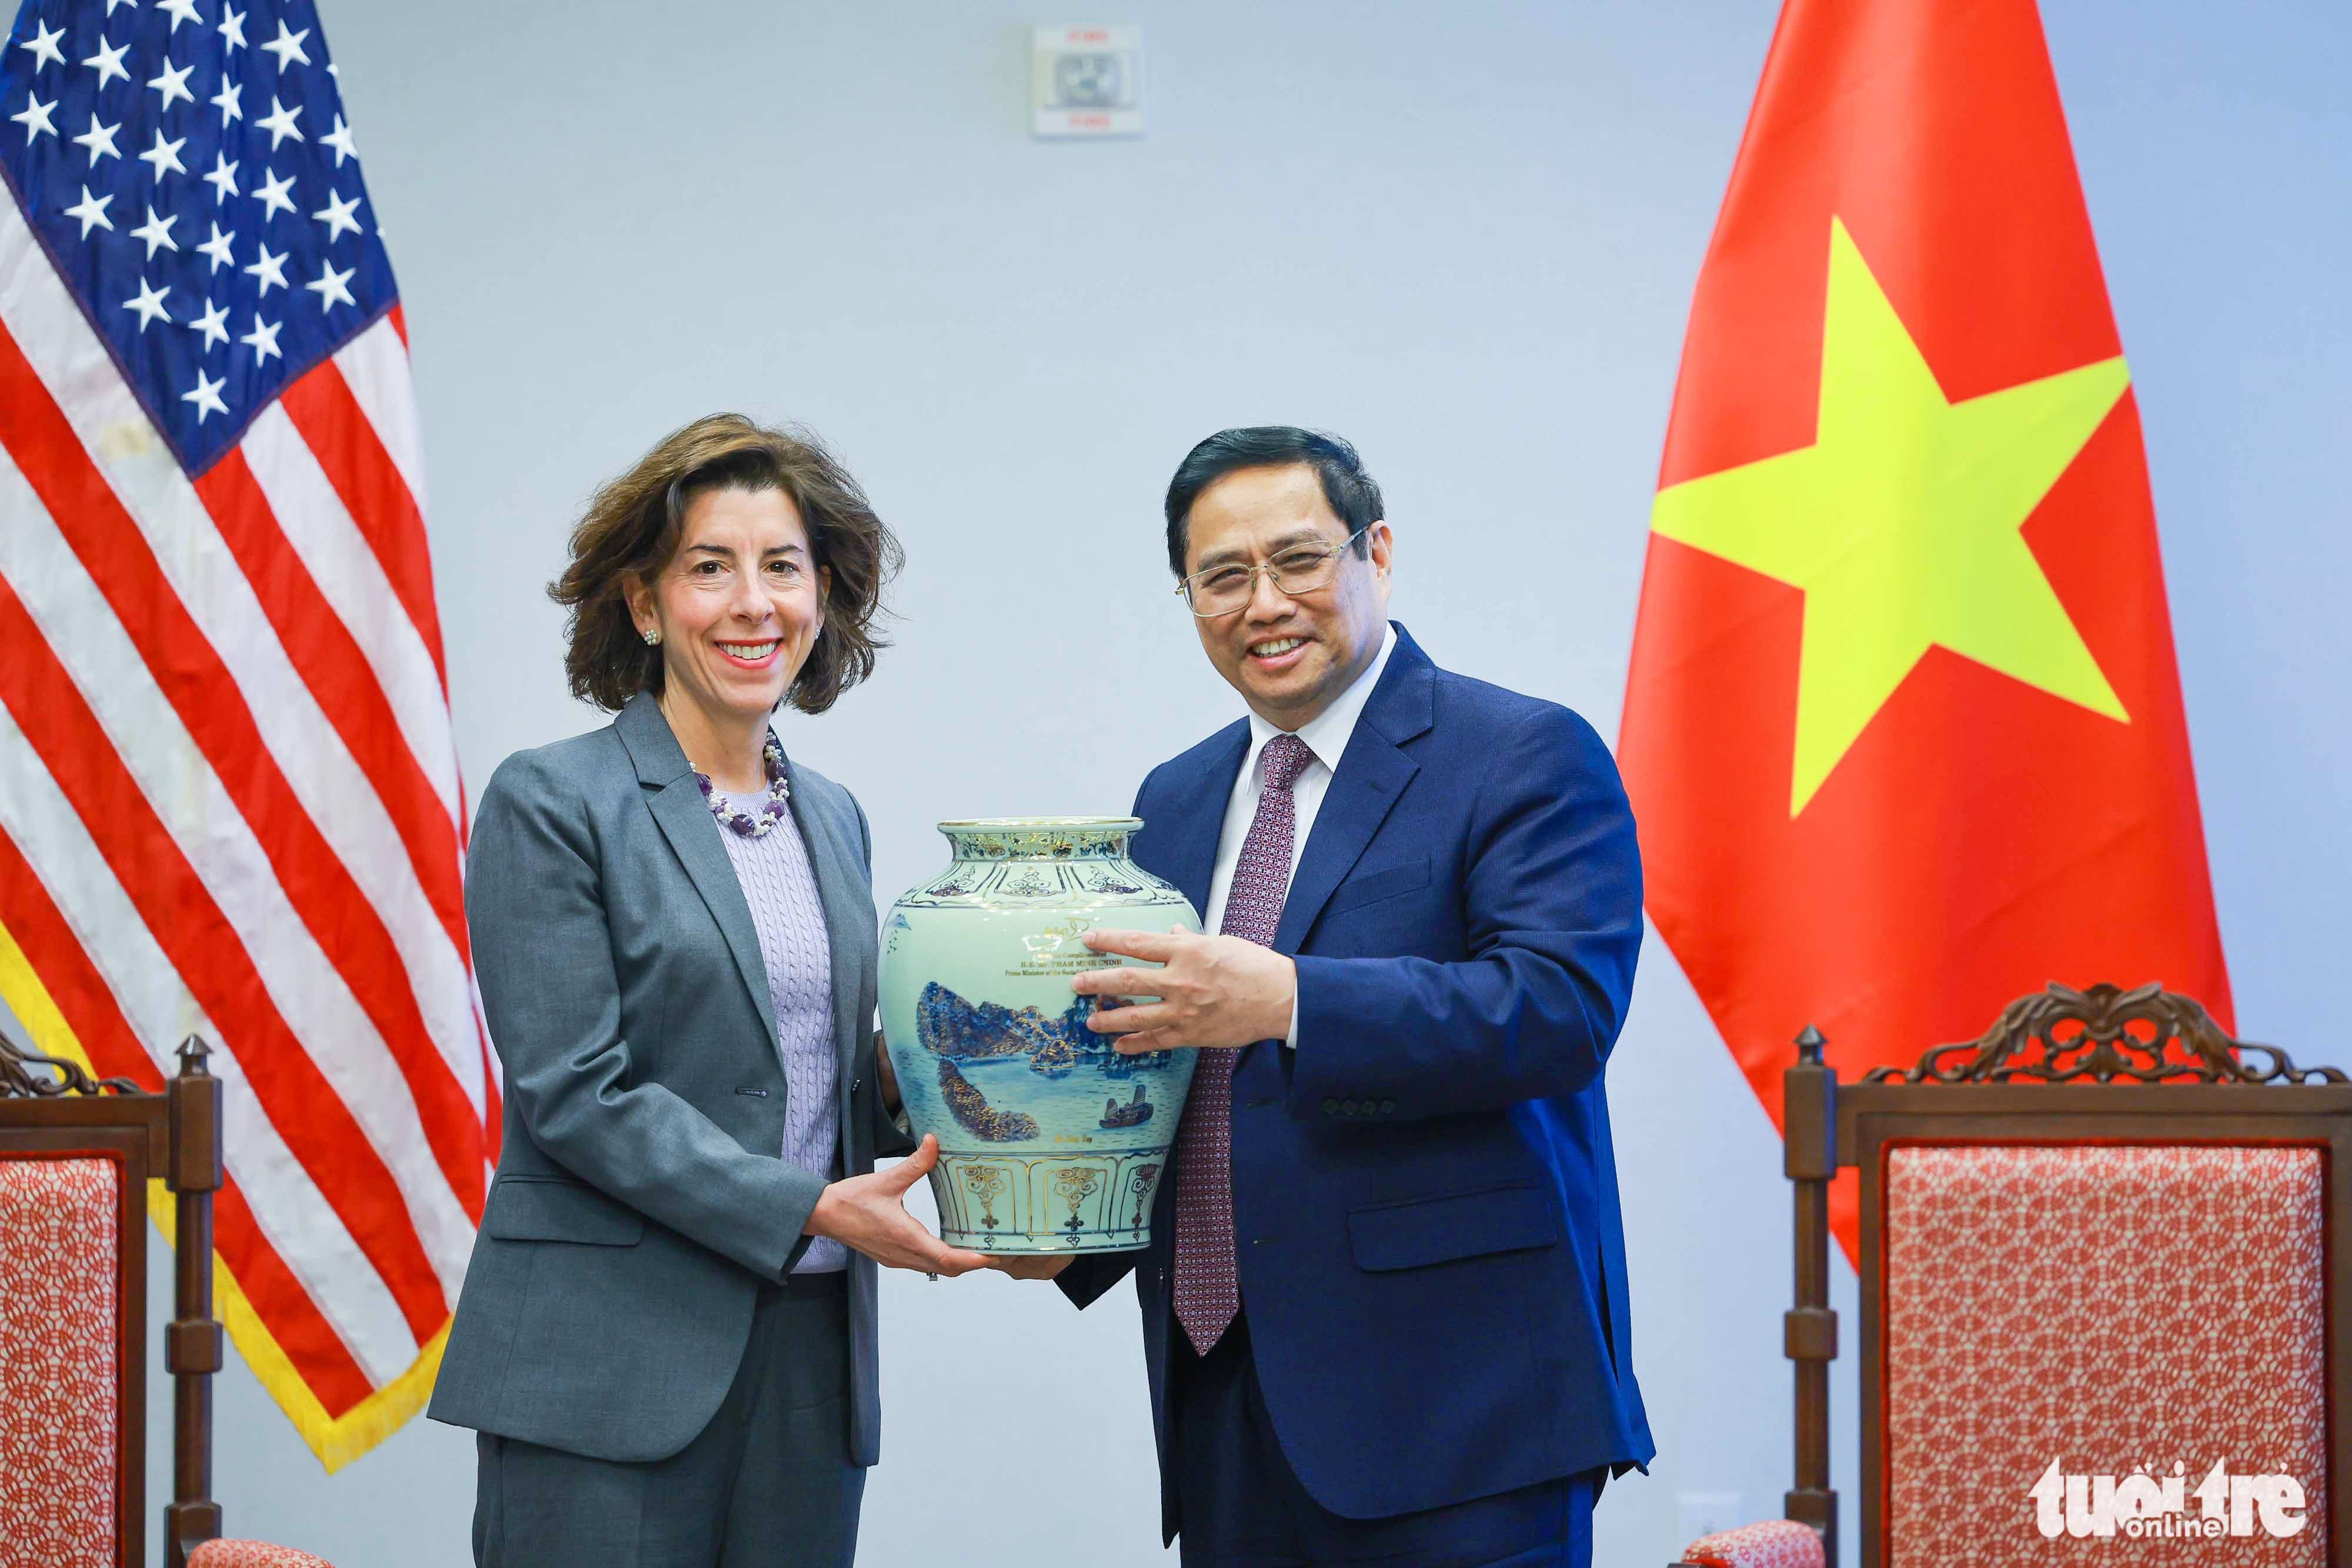 Vietnamese Prime Minister Pham Minh Chinh presents a gift to U.S. Secretary of Commerce Gina Raimondo in Washington, D.C., May 11, 2022. Photo: Nguyen Khanh / Tuoi Tre